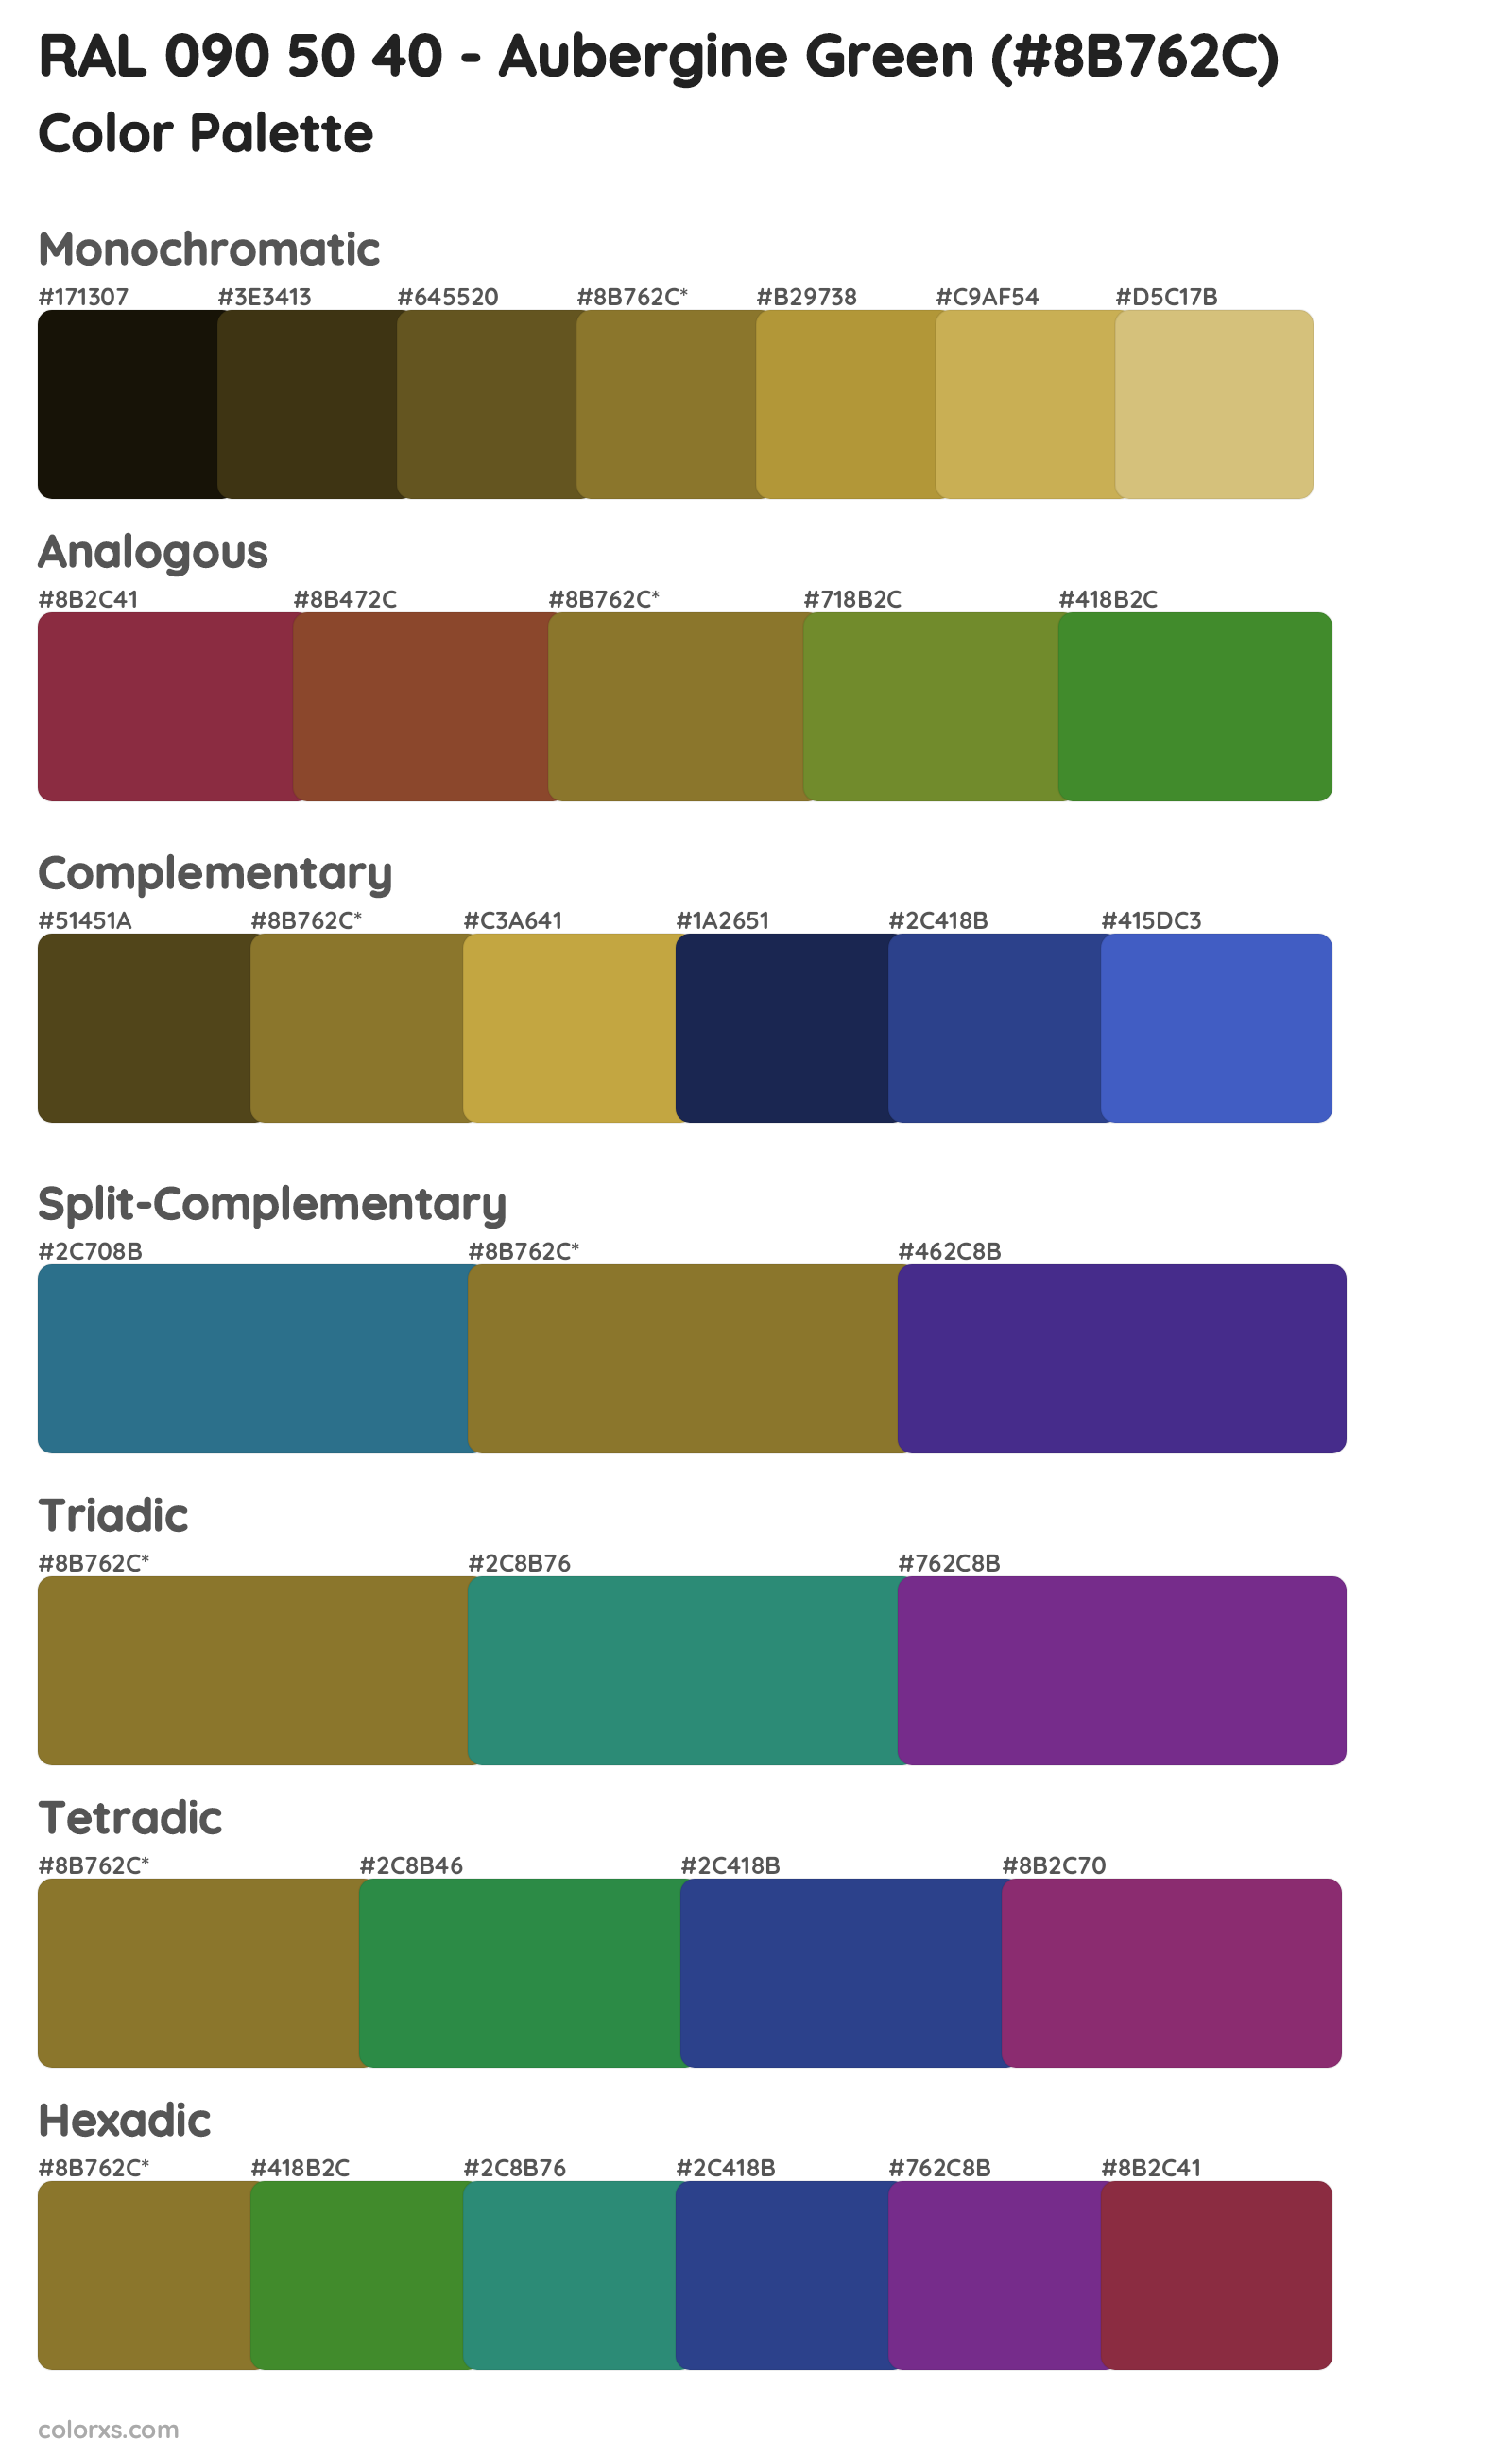 RAL 090 50 40 - Aubergine Green Color Scheme Palettes